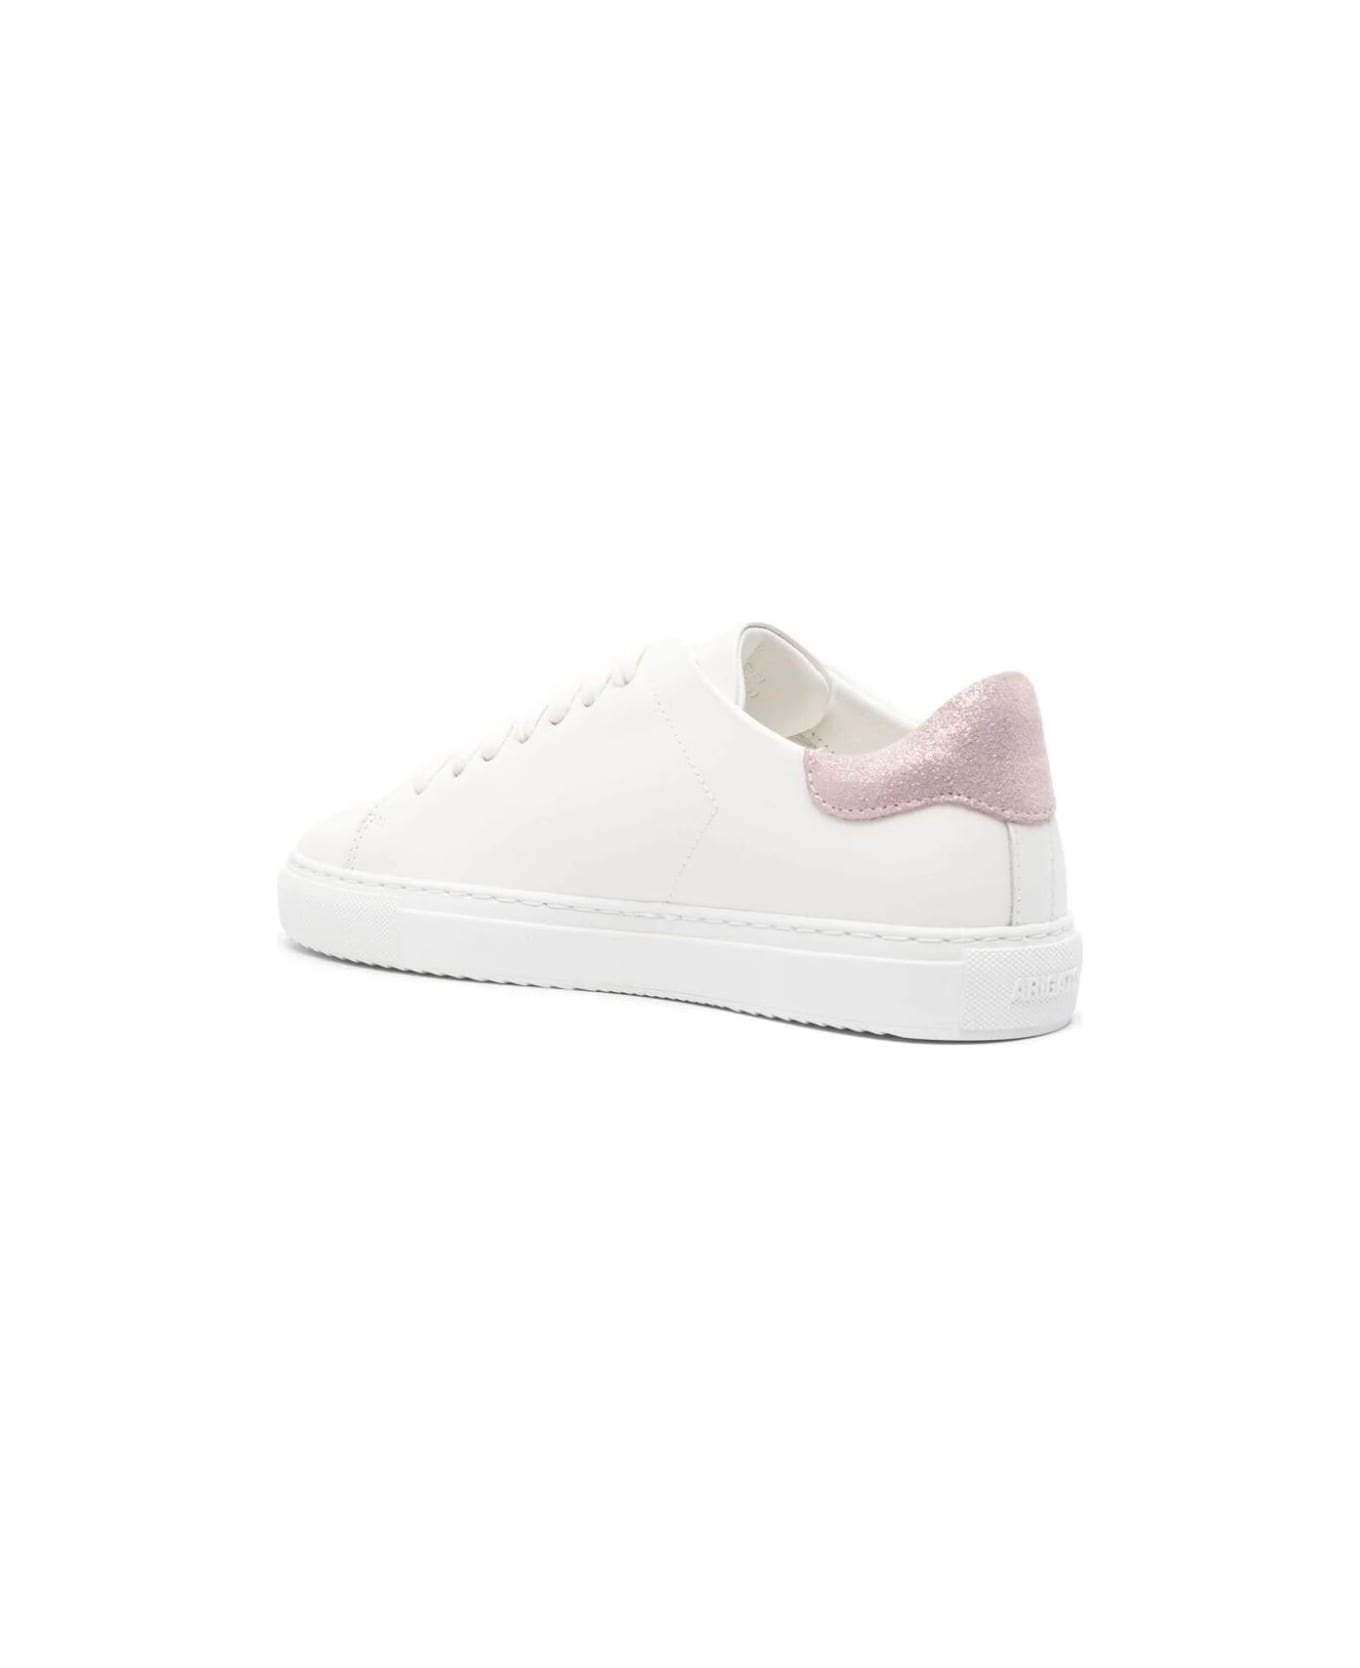 Axel Arigato Clean 90 Sneaker - White Pink